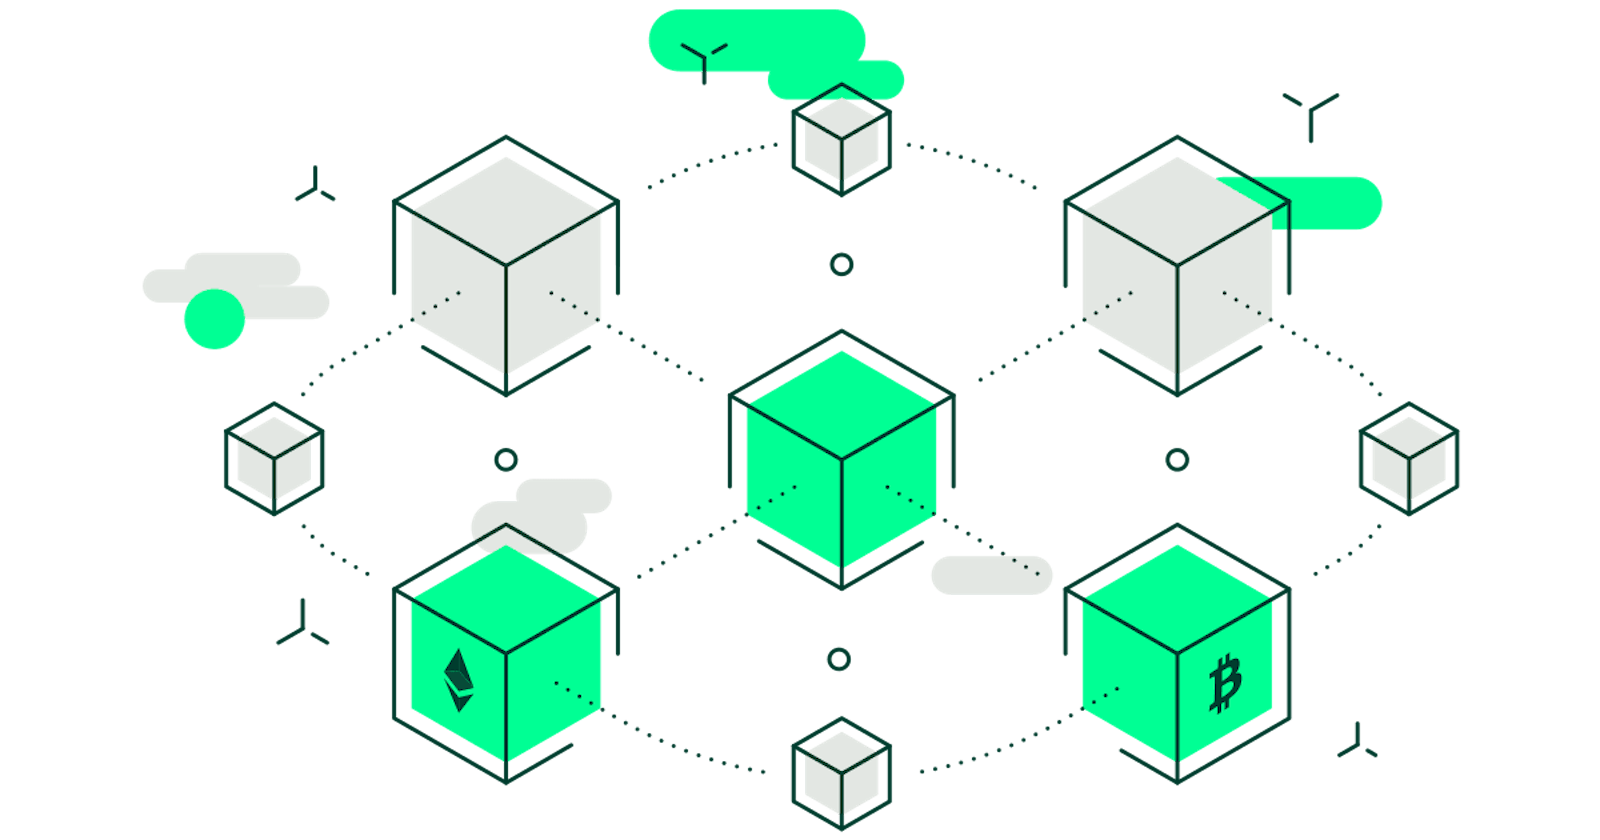 Creating a Blockchain: Part 2 - Blocks and hashing